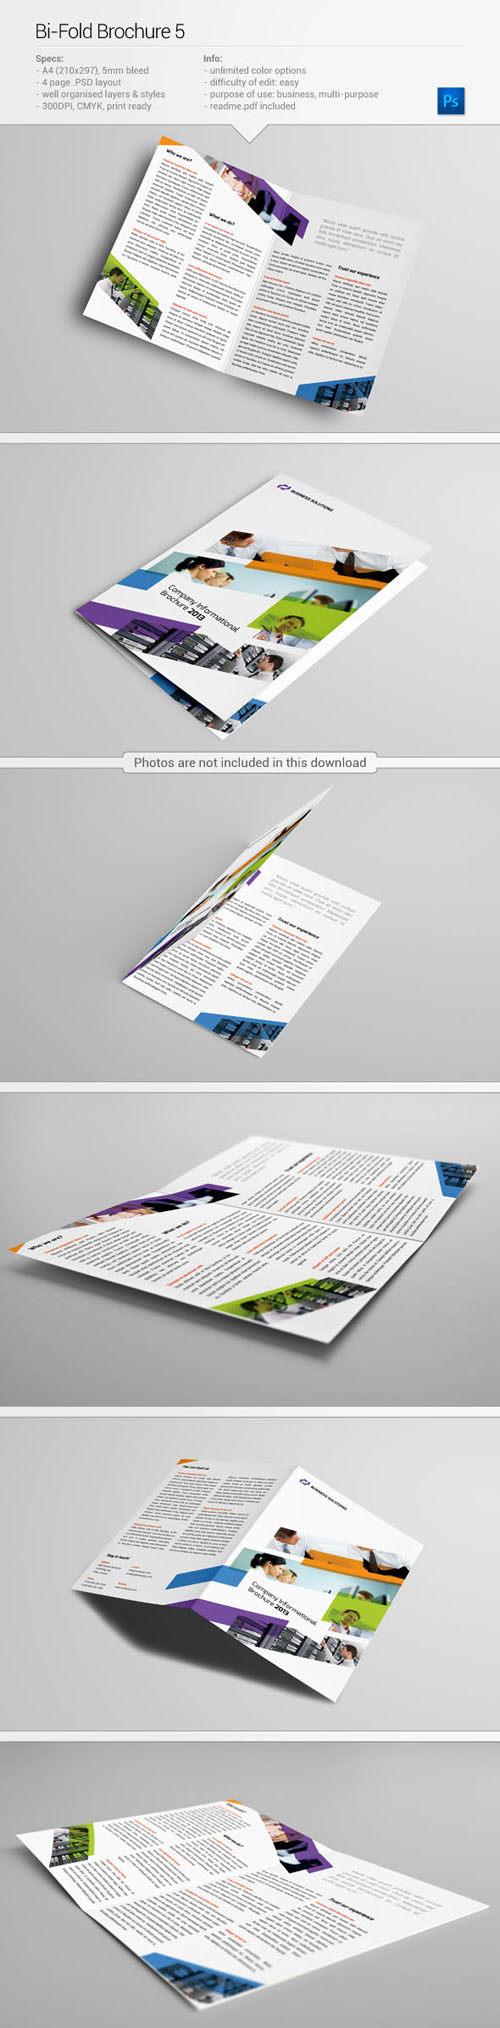 Bi-Fold Brochure Free PSD File